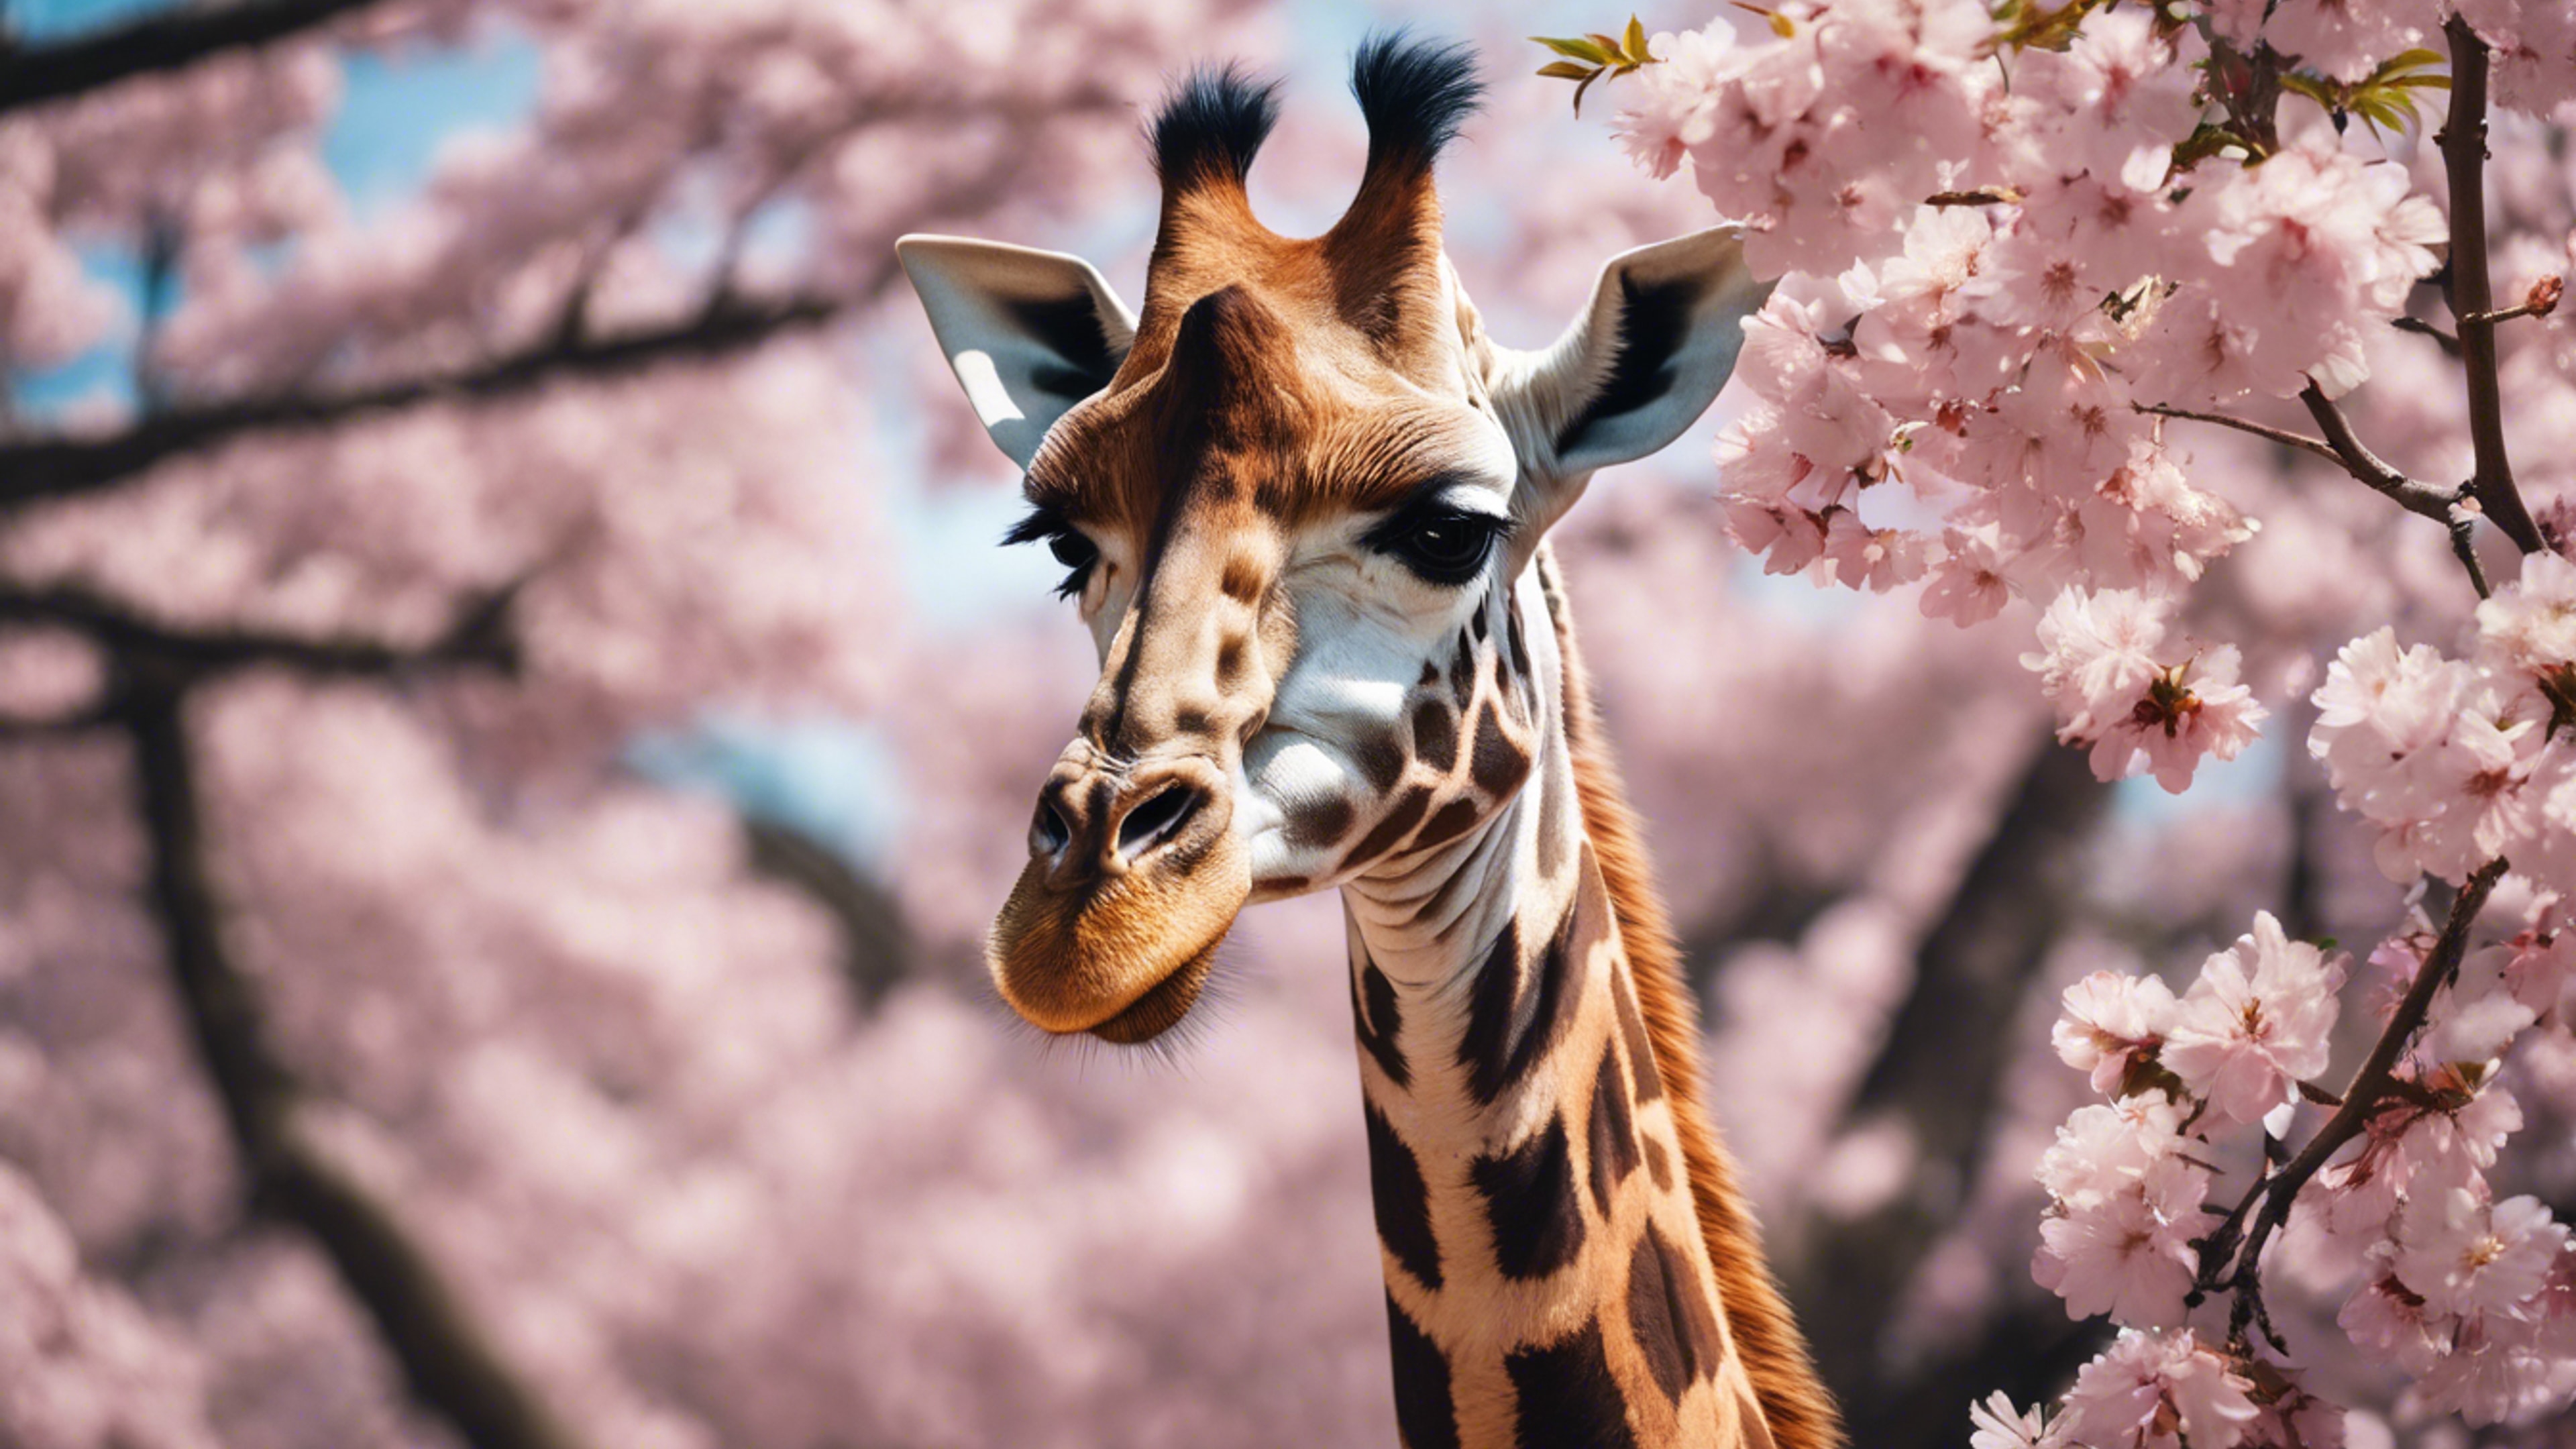 A giraffe hiding playfully behind a cherry blossom tree in full bloom. Wallpaper[1212acafafba4b4d89bd]